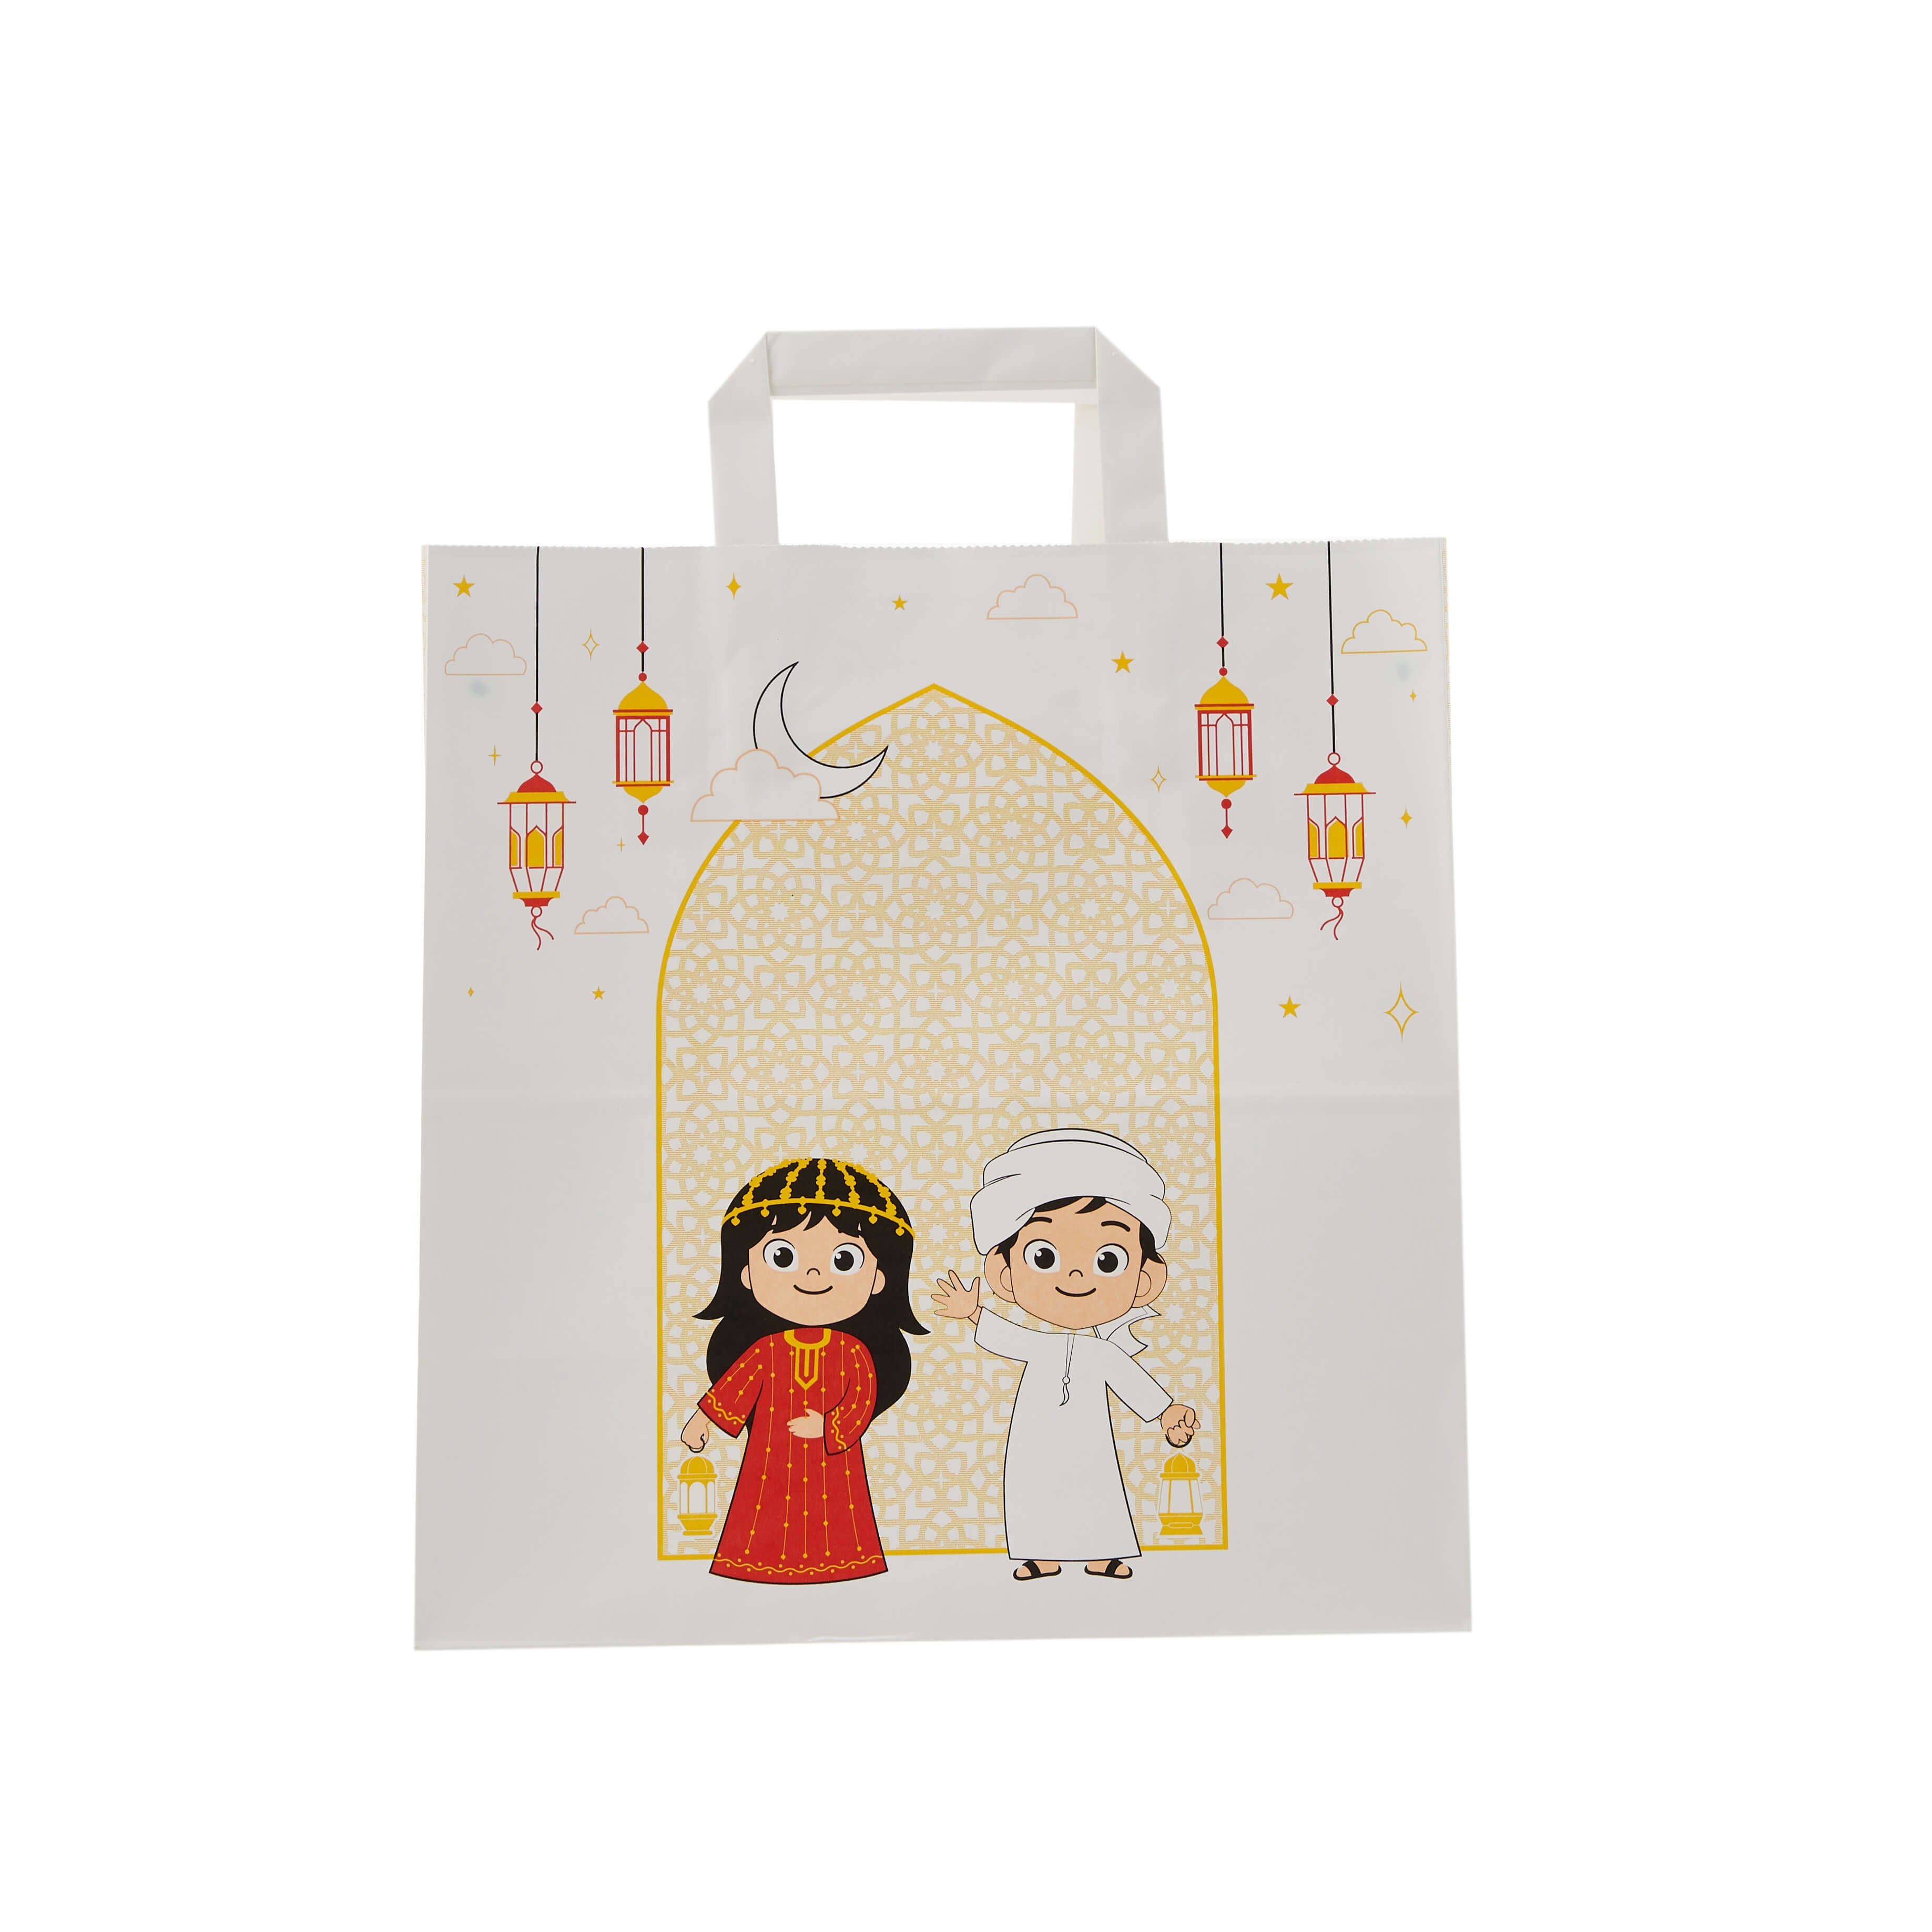 Haq Al Laila Theme Printed Gift Paper Bag - Hotpack Global